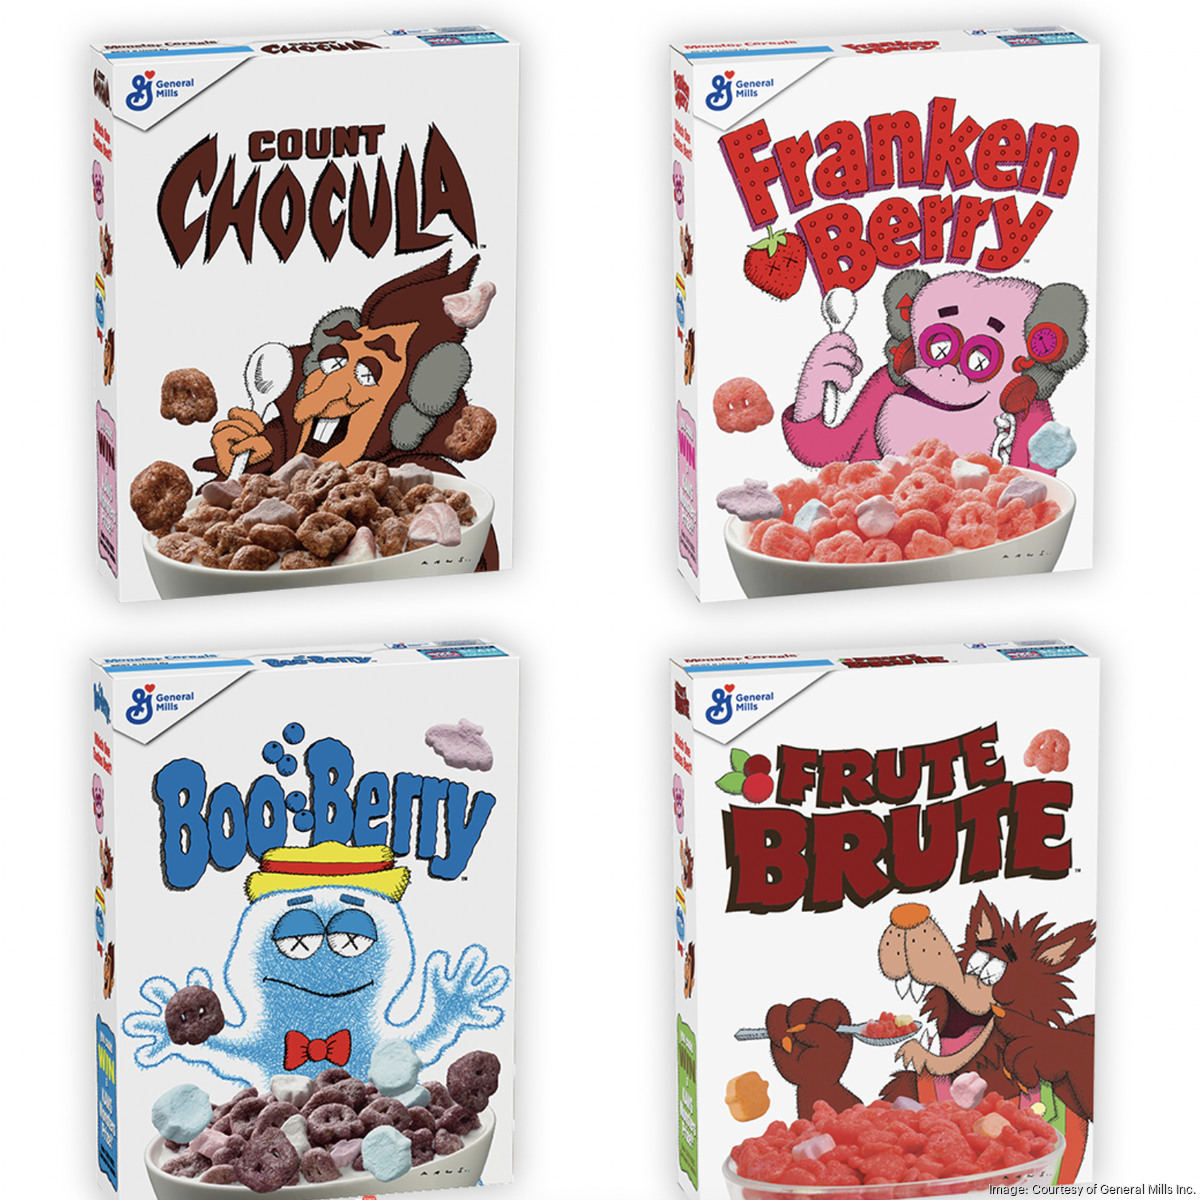 General Mills taps New York artist KAWS for monster-themed cereal ...